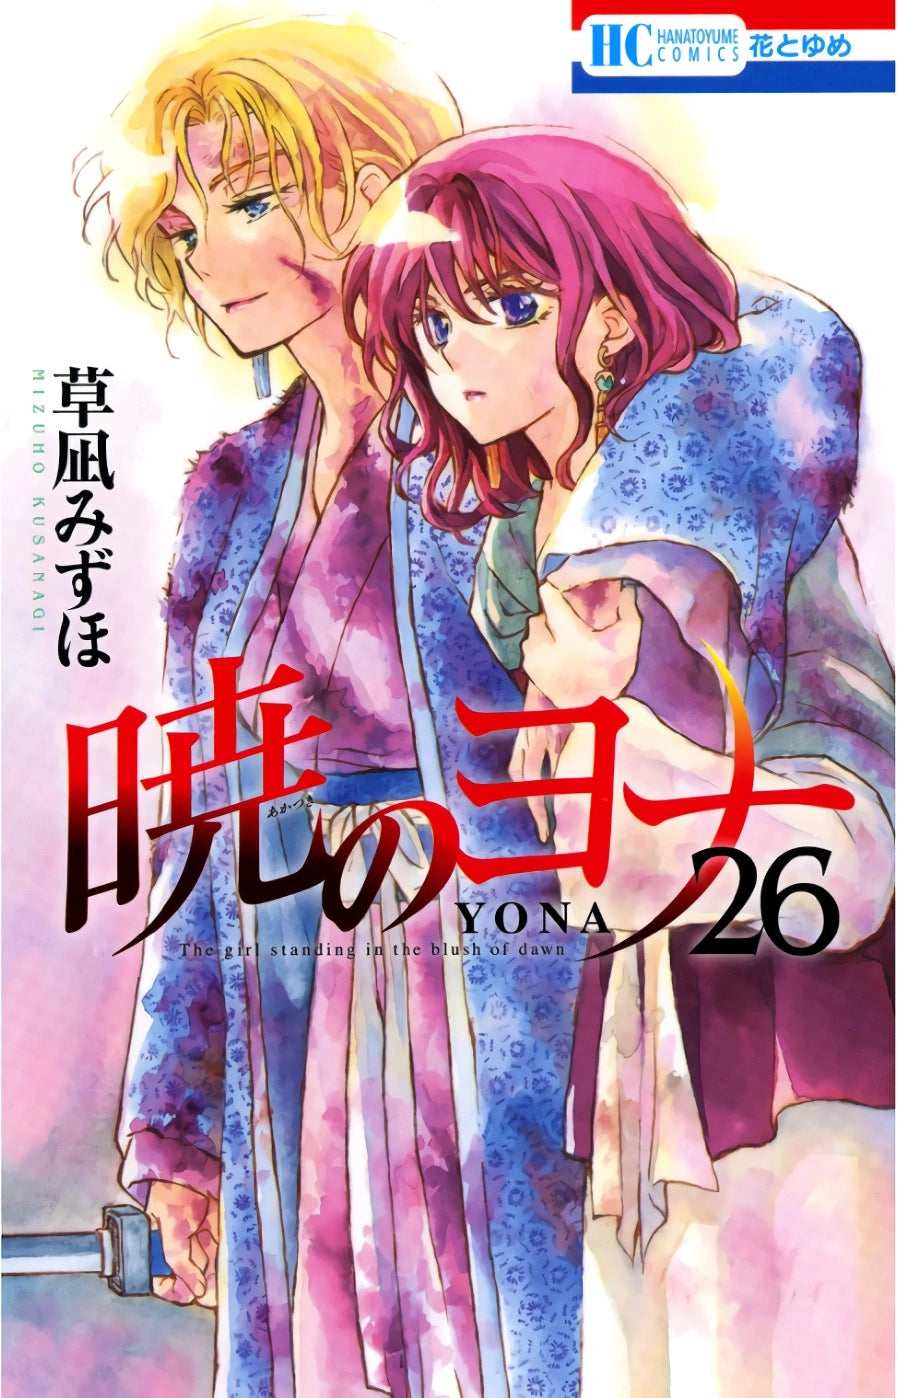 Manga Akatsuki No Yona 26 Version Japonaise